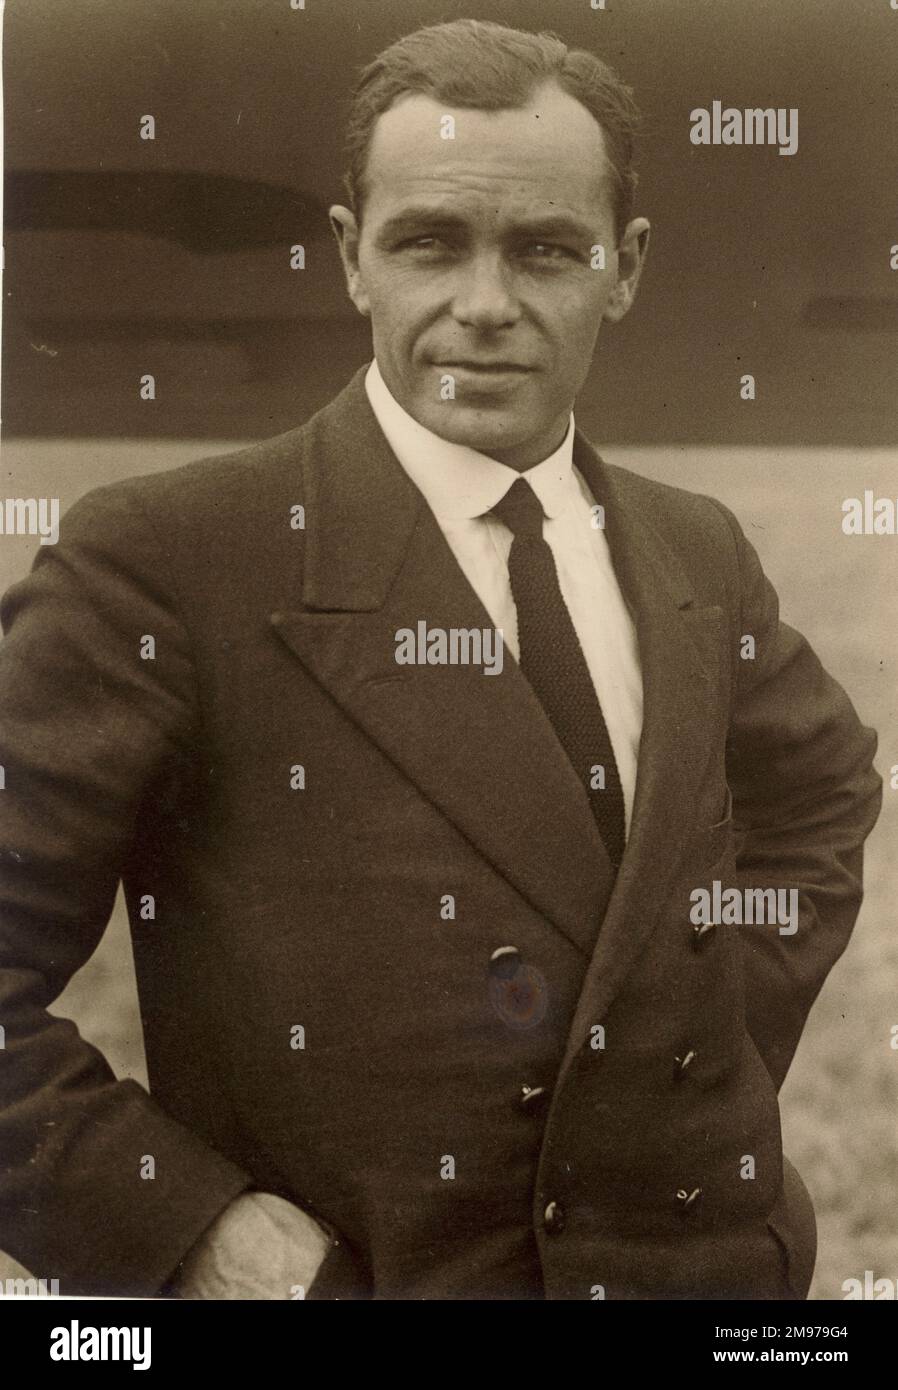 SQN LDR Herbert John Louis Hinkler, AFC, DSM, RAAF, 1892-1933. Stockfoto